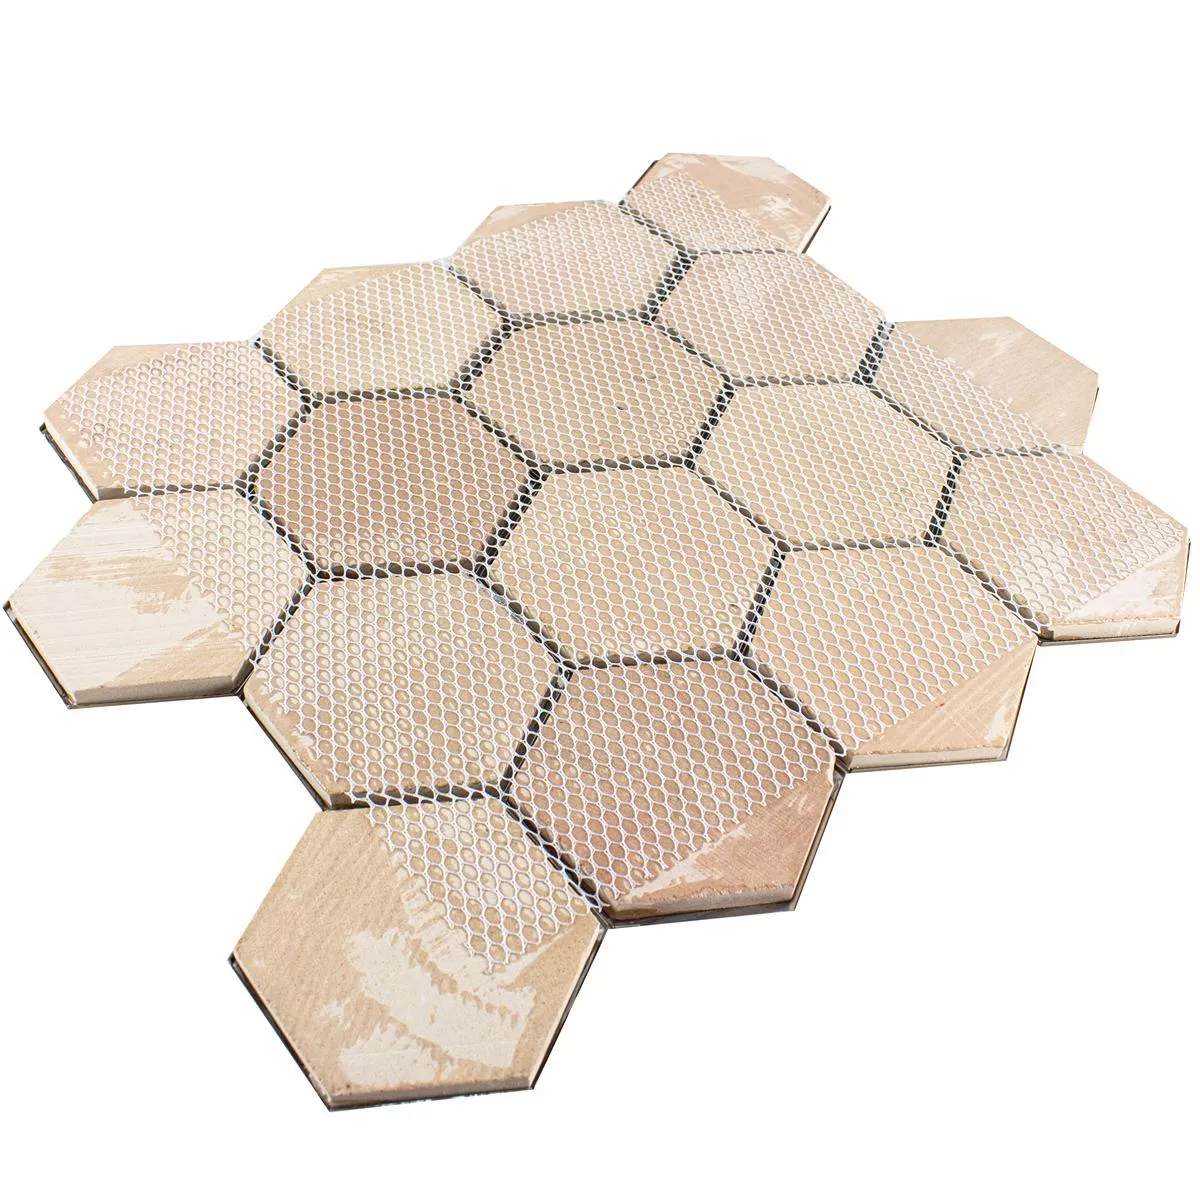 Edelstahl Mosaikfliesen Durango Hexagon 3D Kupfer